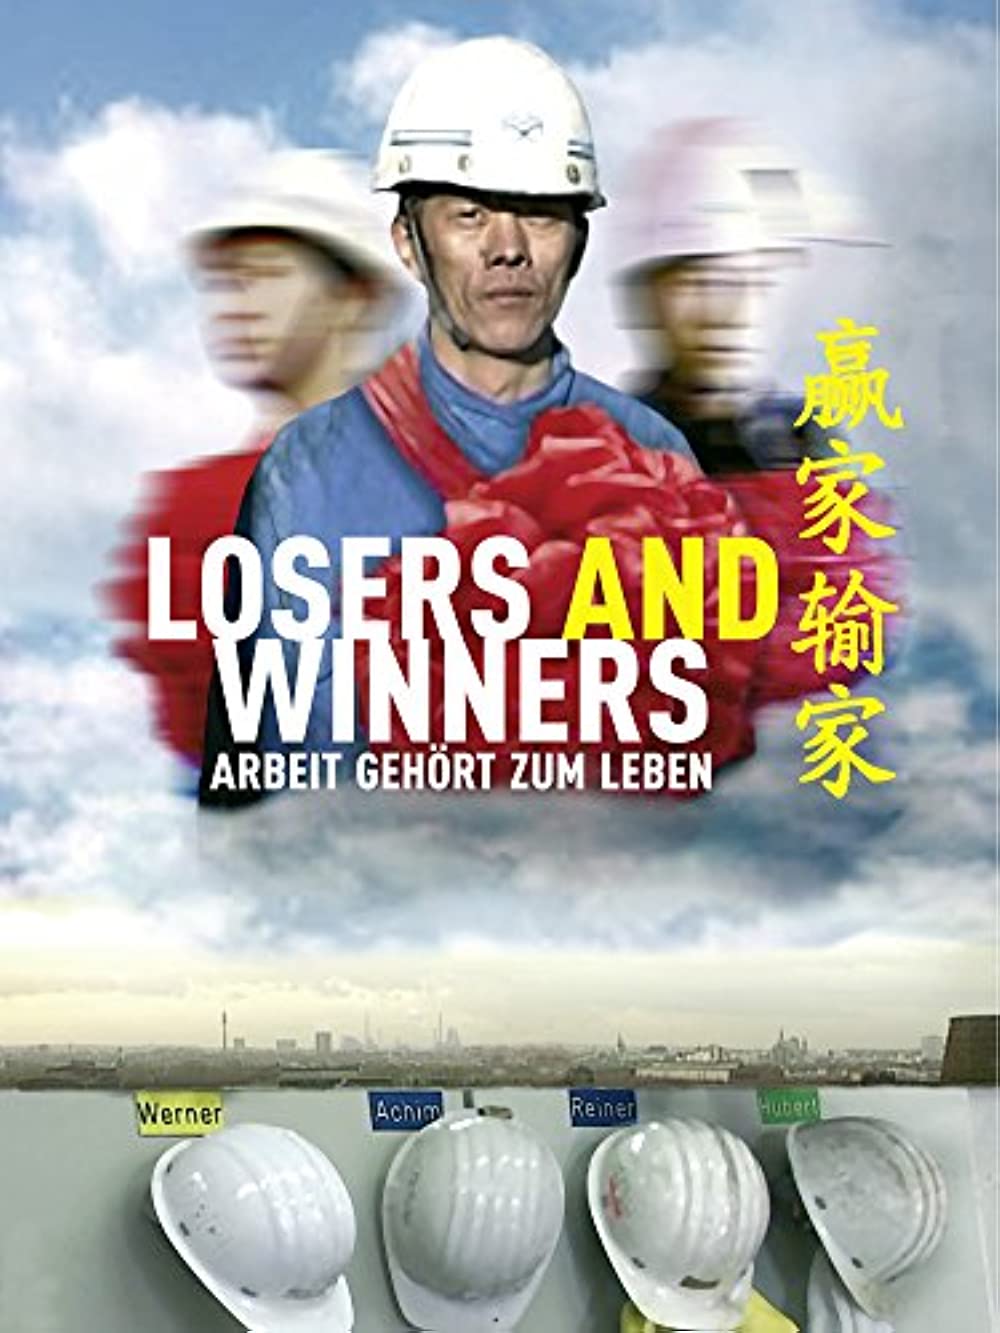 Filmbeschreibung zu Losers and Winners